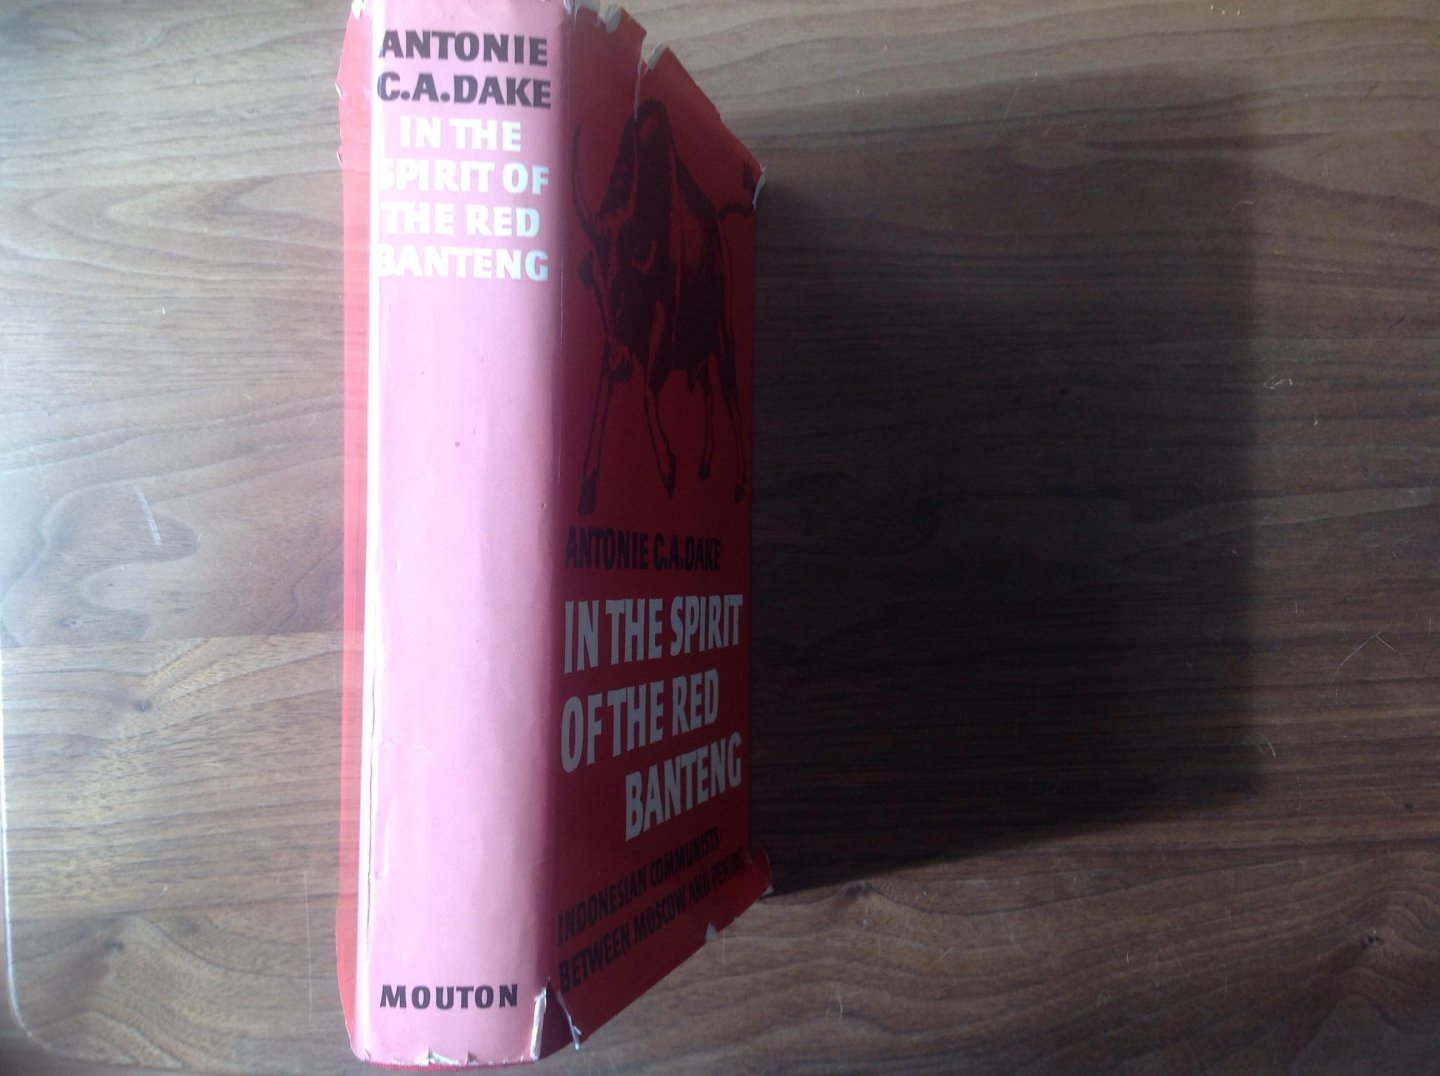 Antonie C.A. Daken - In the spirit of the red banteng